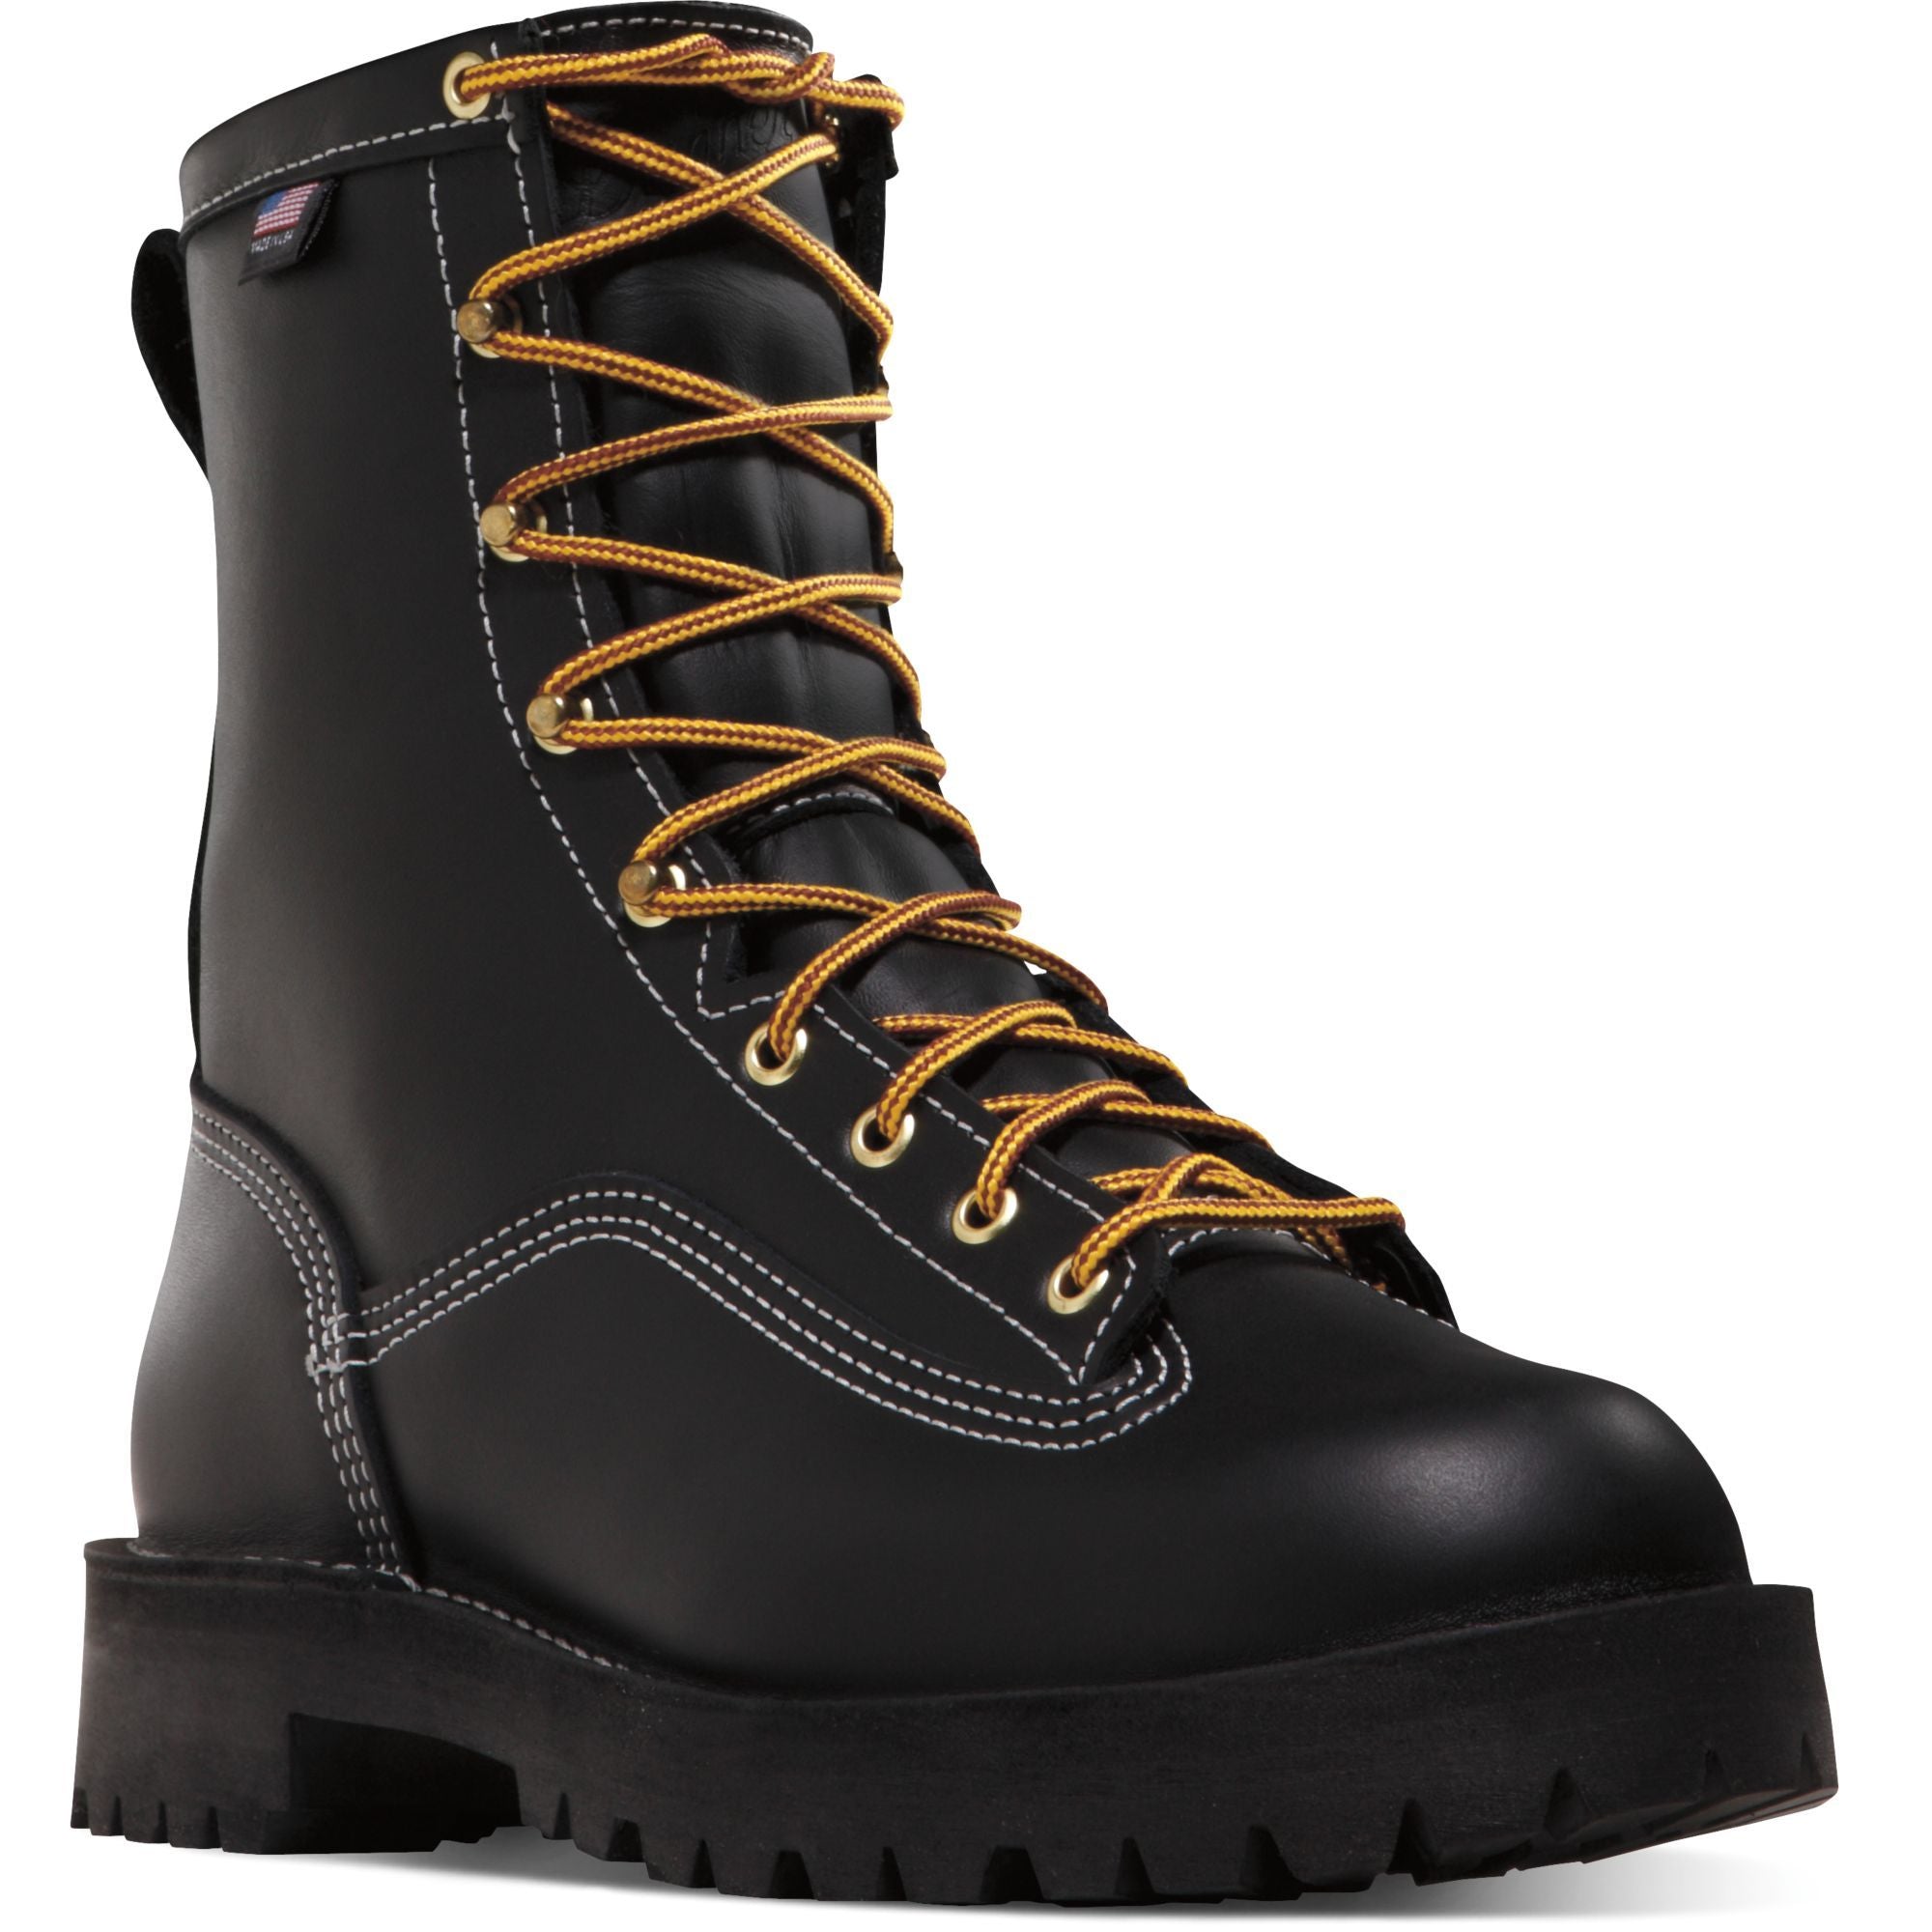 Danner Men's Rain Forest USA Made 8" Insulated WP Work Boot Black 11700 7 / Medium / Black - Overlook Boots